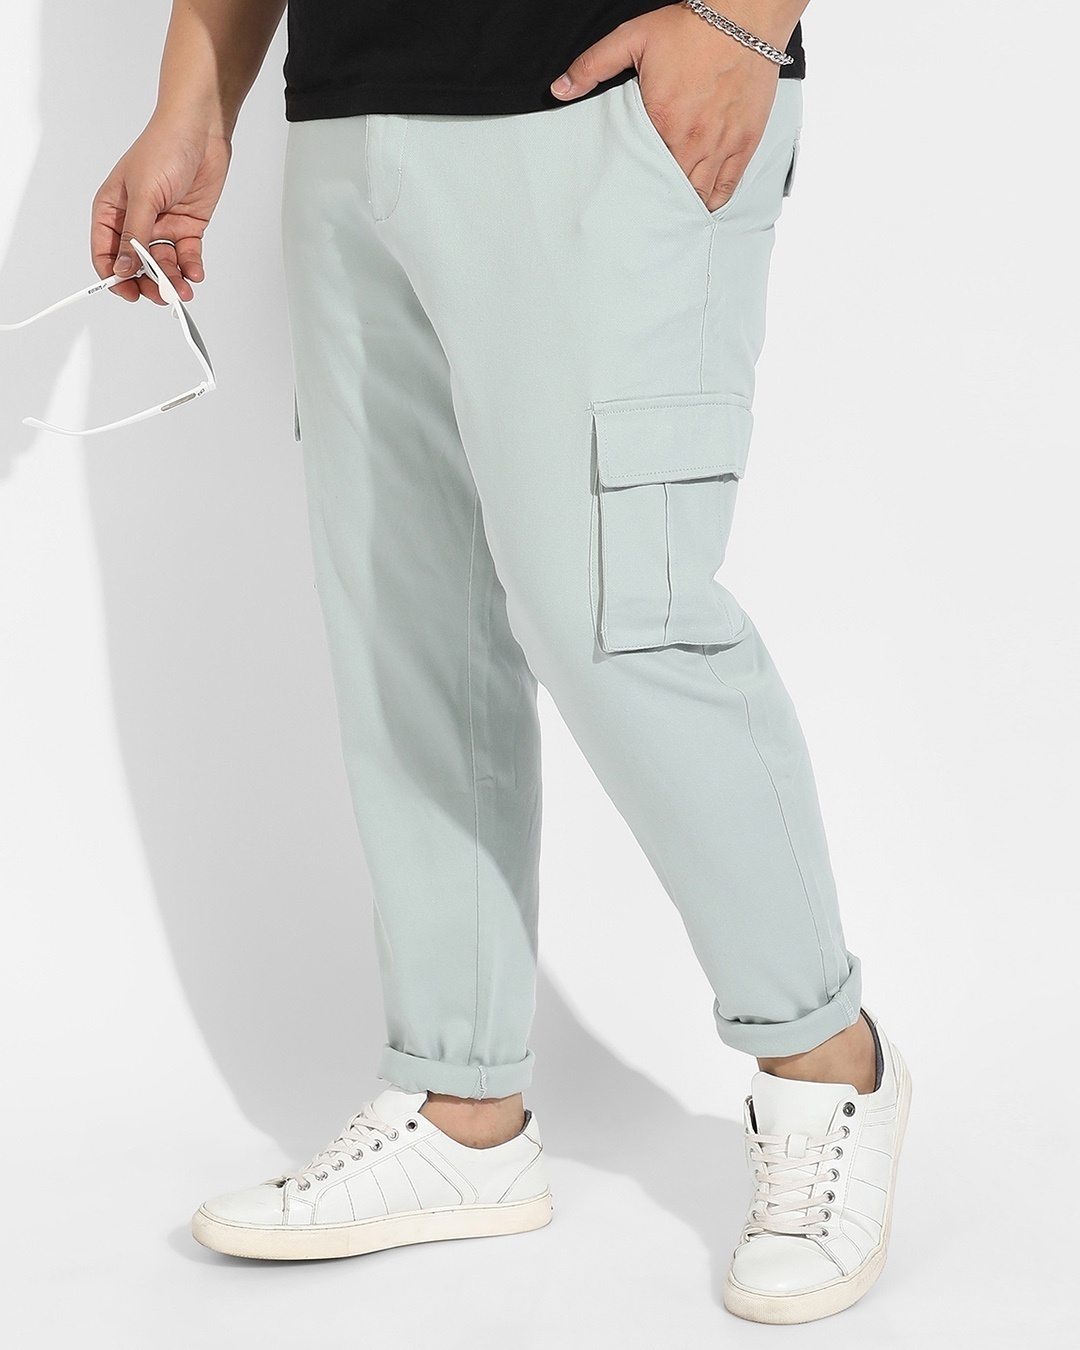 Buy JOHN PRIDE Men Plus Size Classic Silver Regular Fit Formal Trousers(JPTR22010J_42)  at Amazon.in